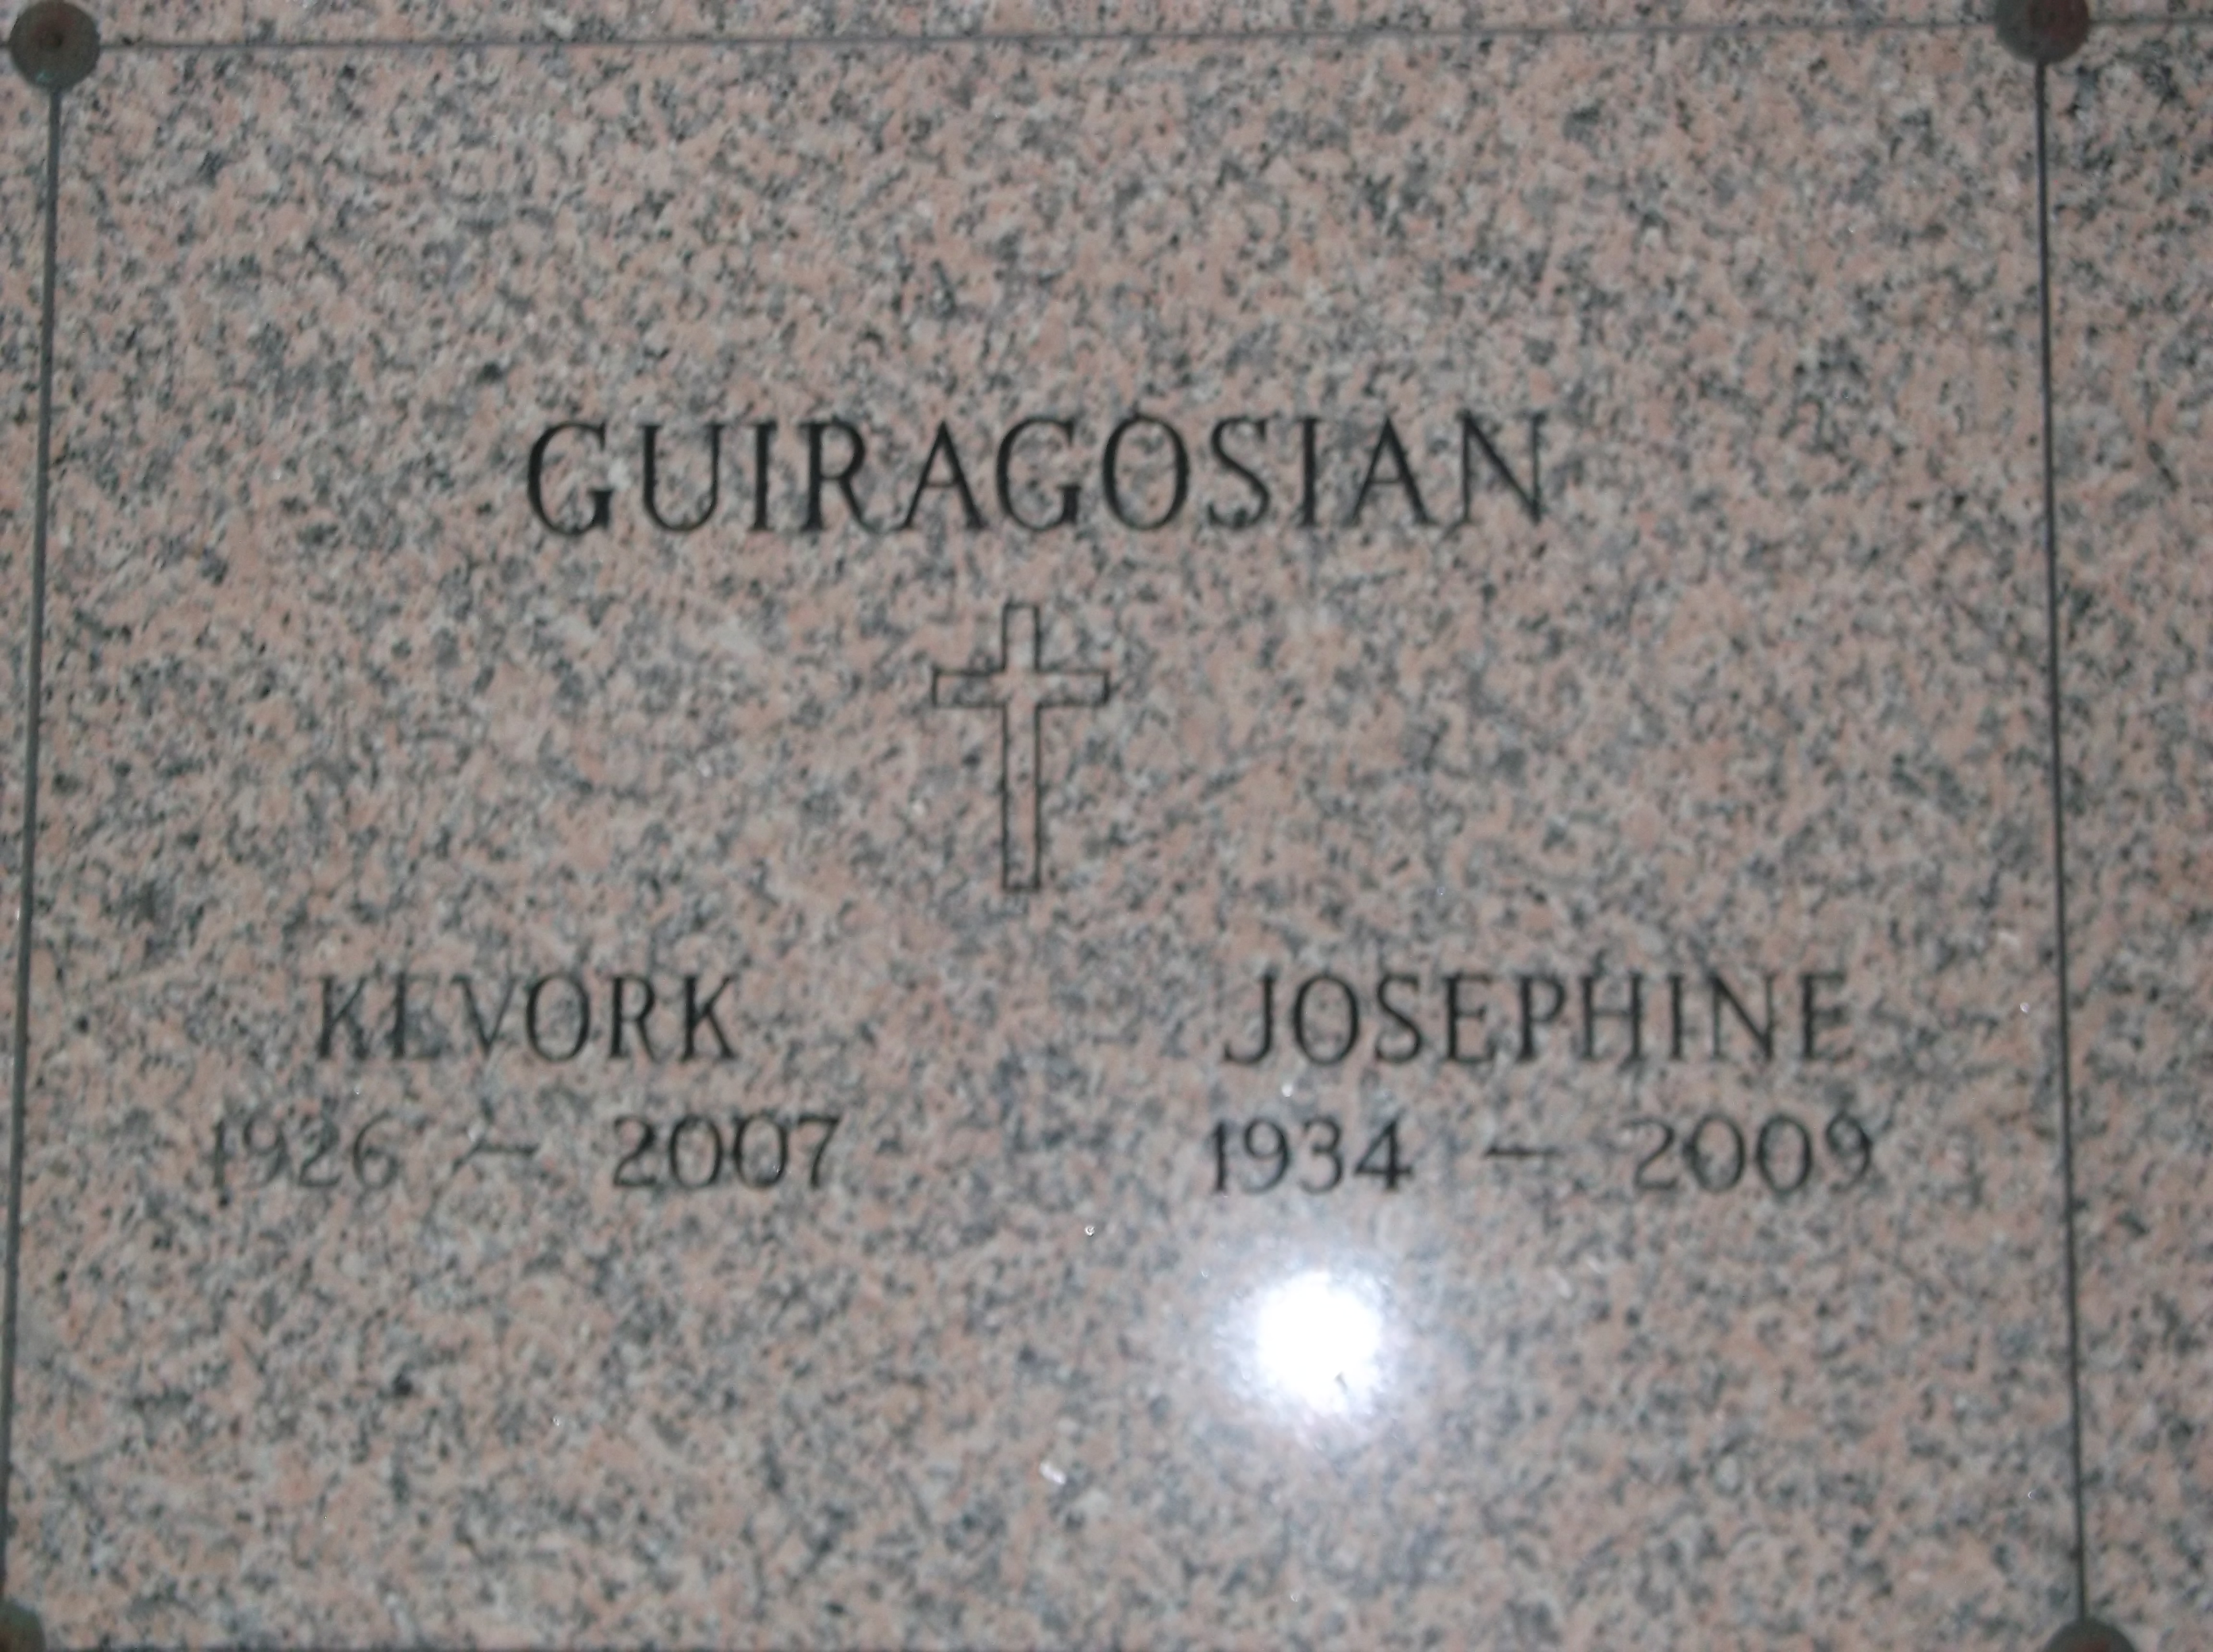 Josephine Guiragosian